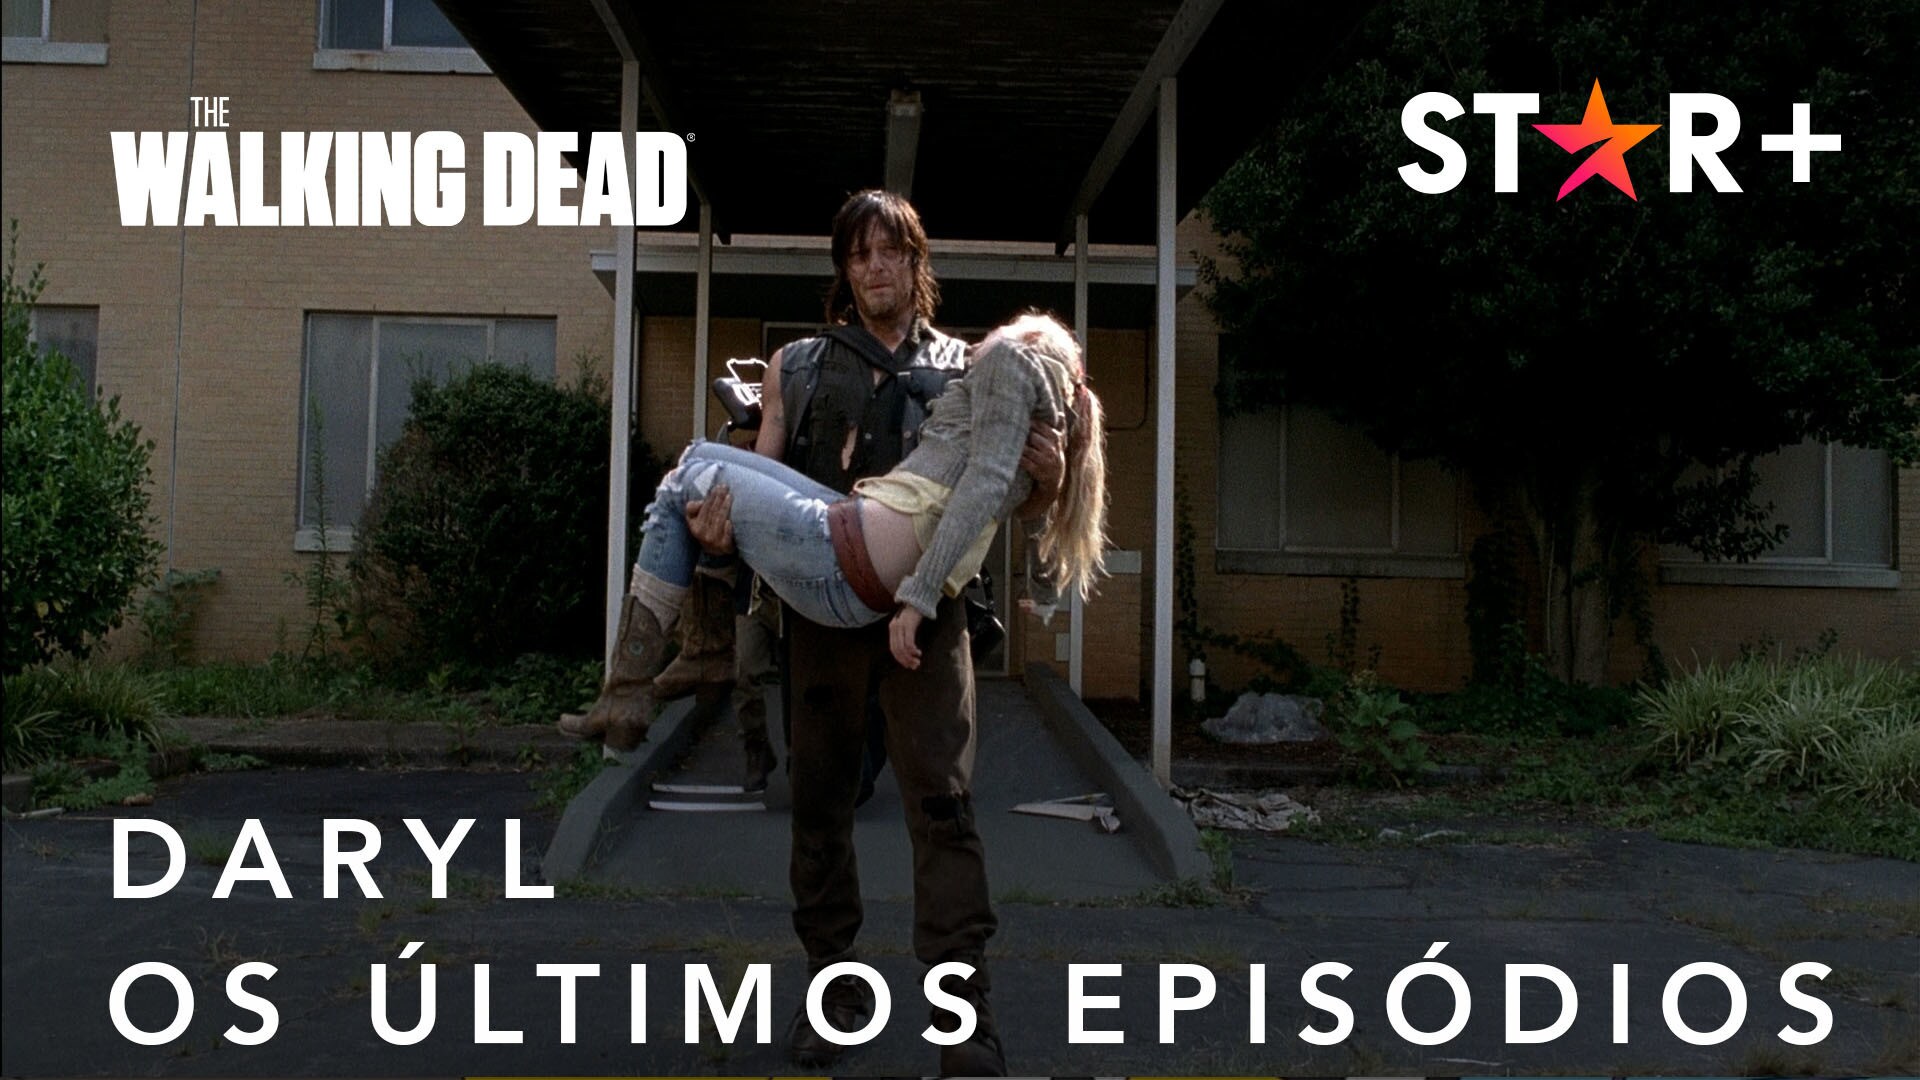 The Walking Dead | Daryl | Os Últimos Episódios | Star+